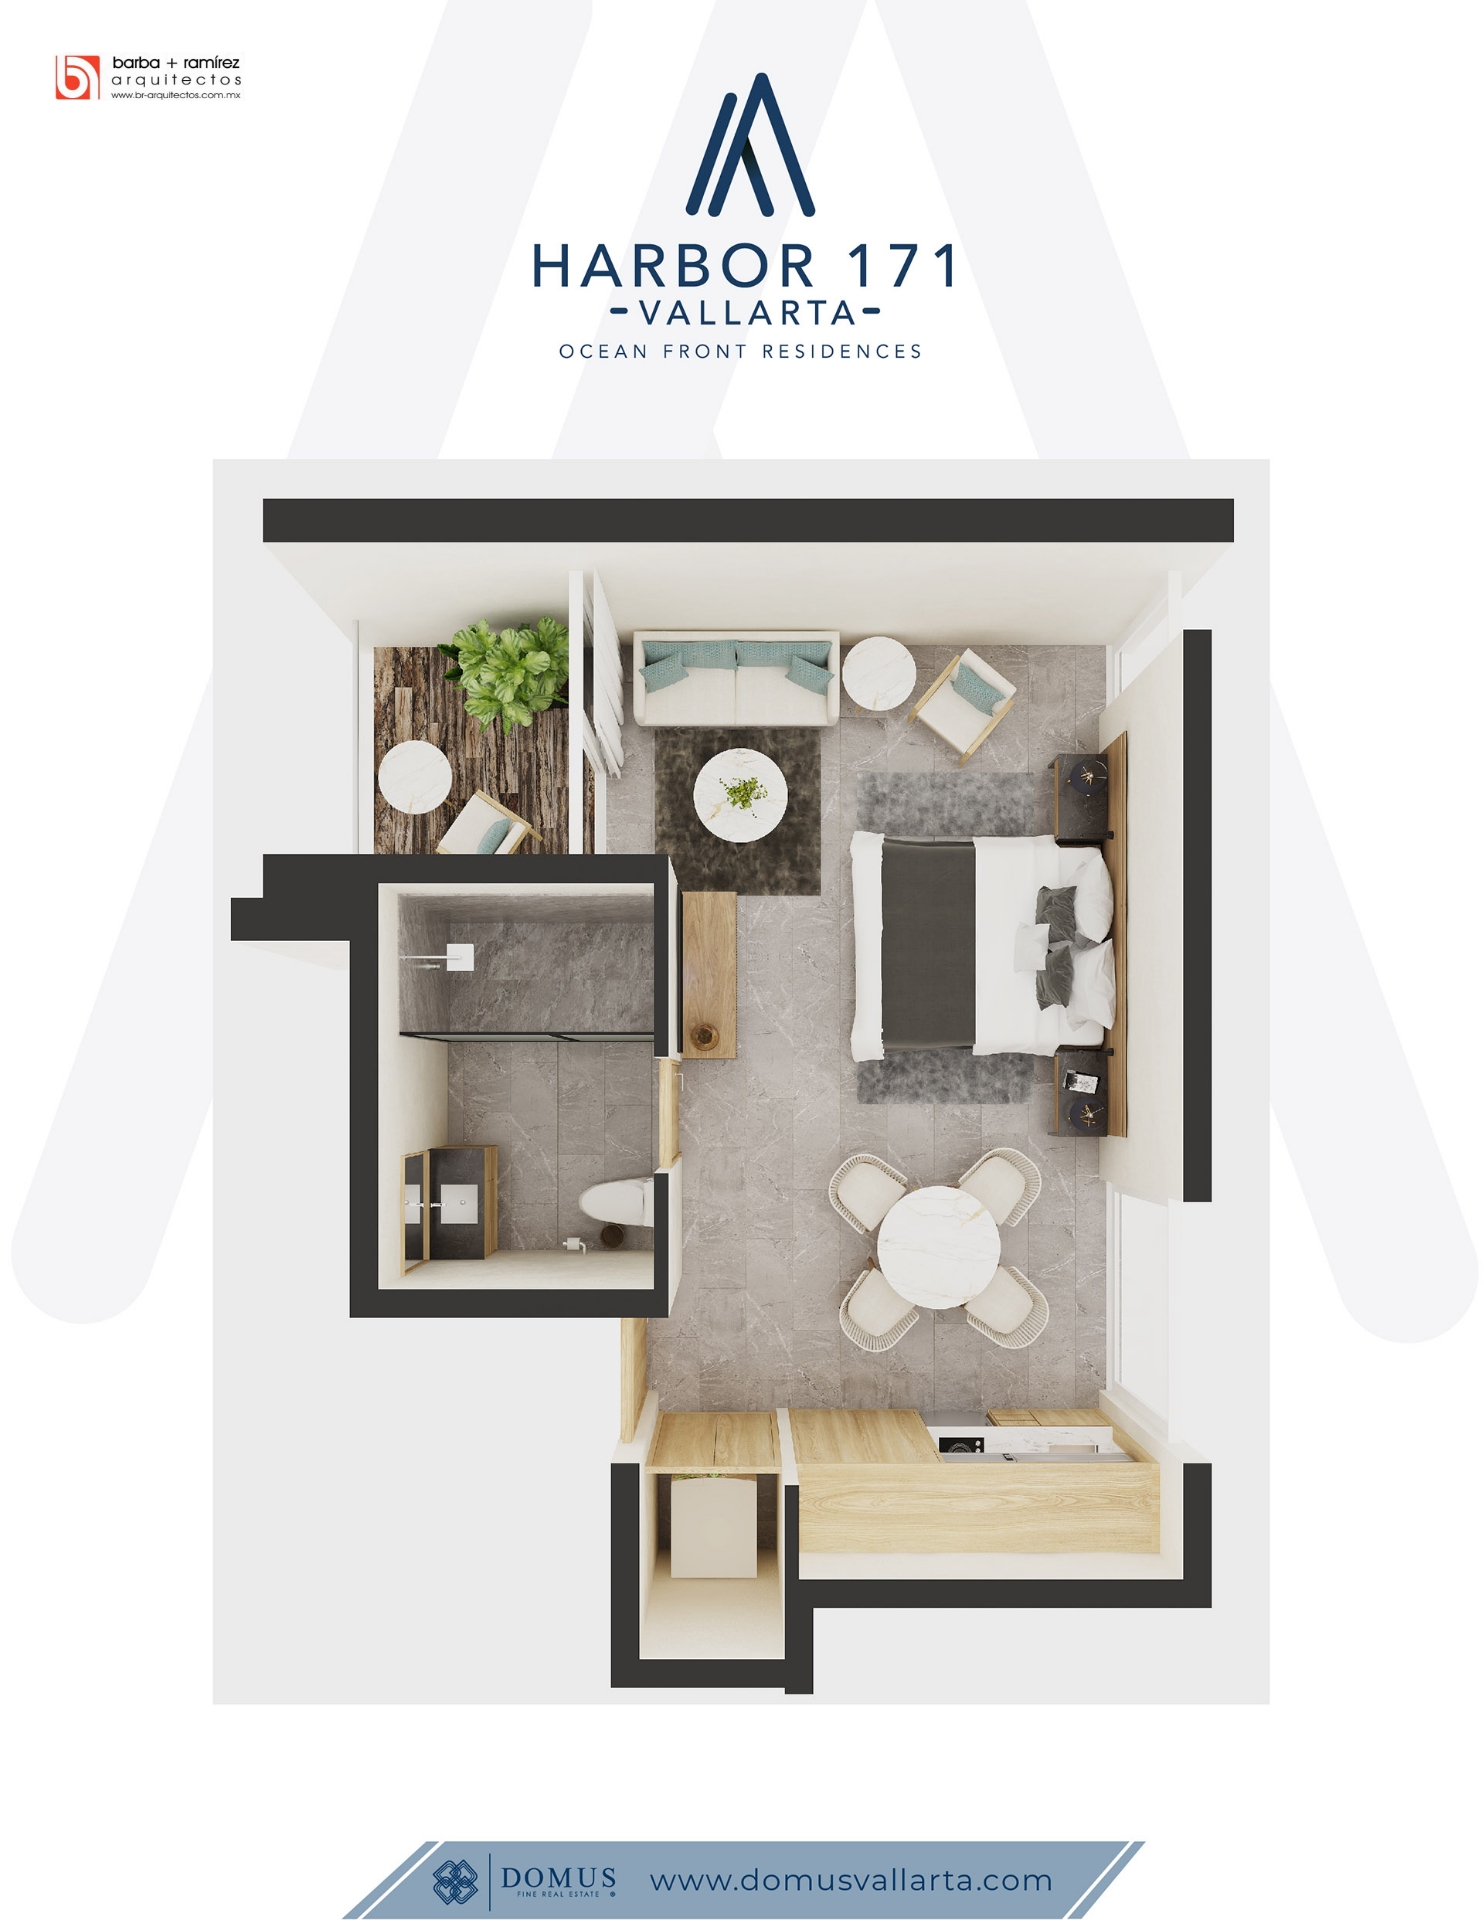 Unit 410 Blueprint - Harbor 171